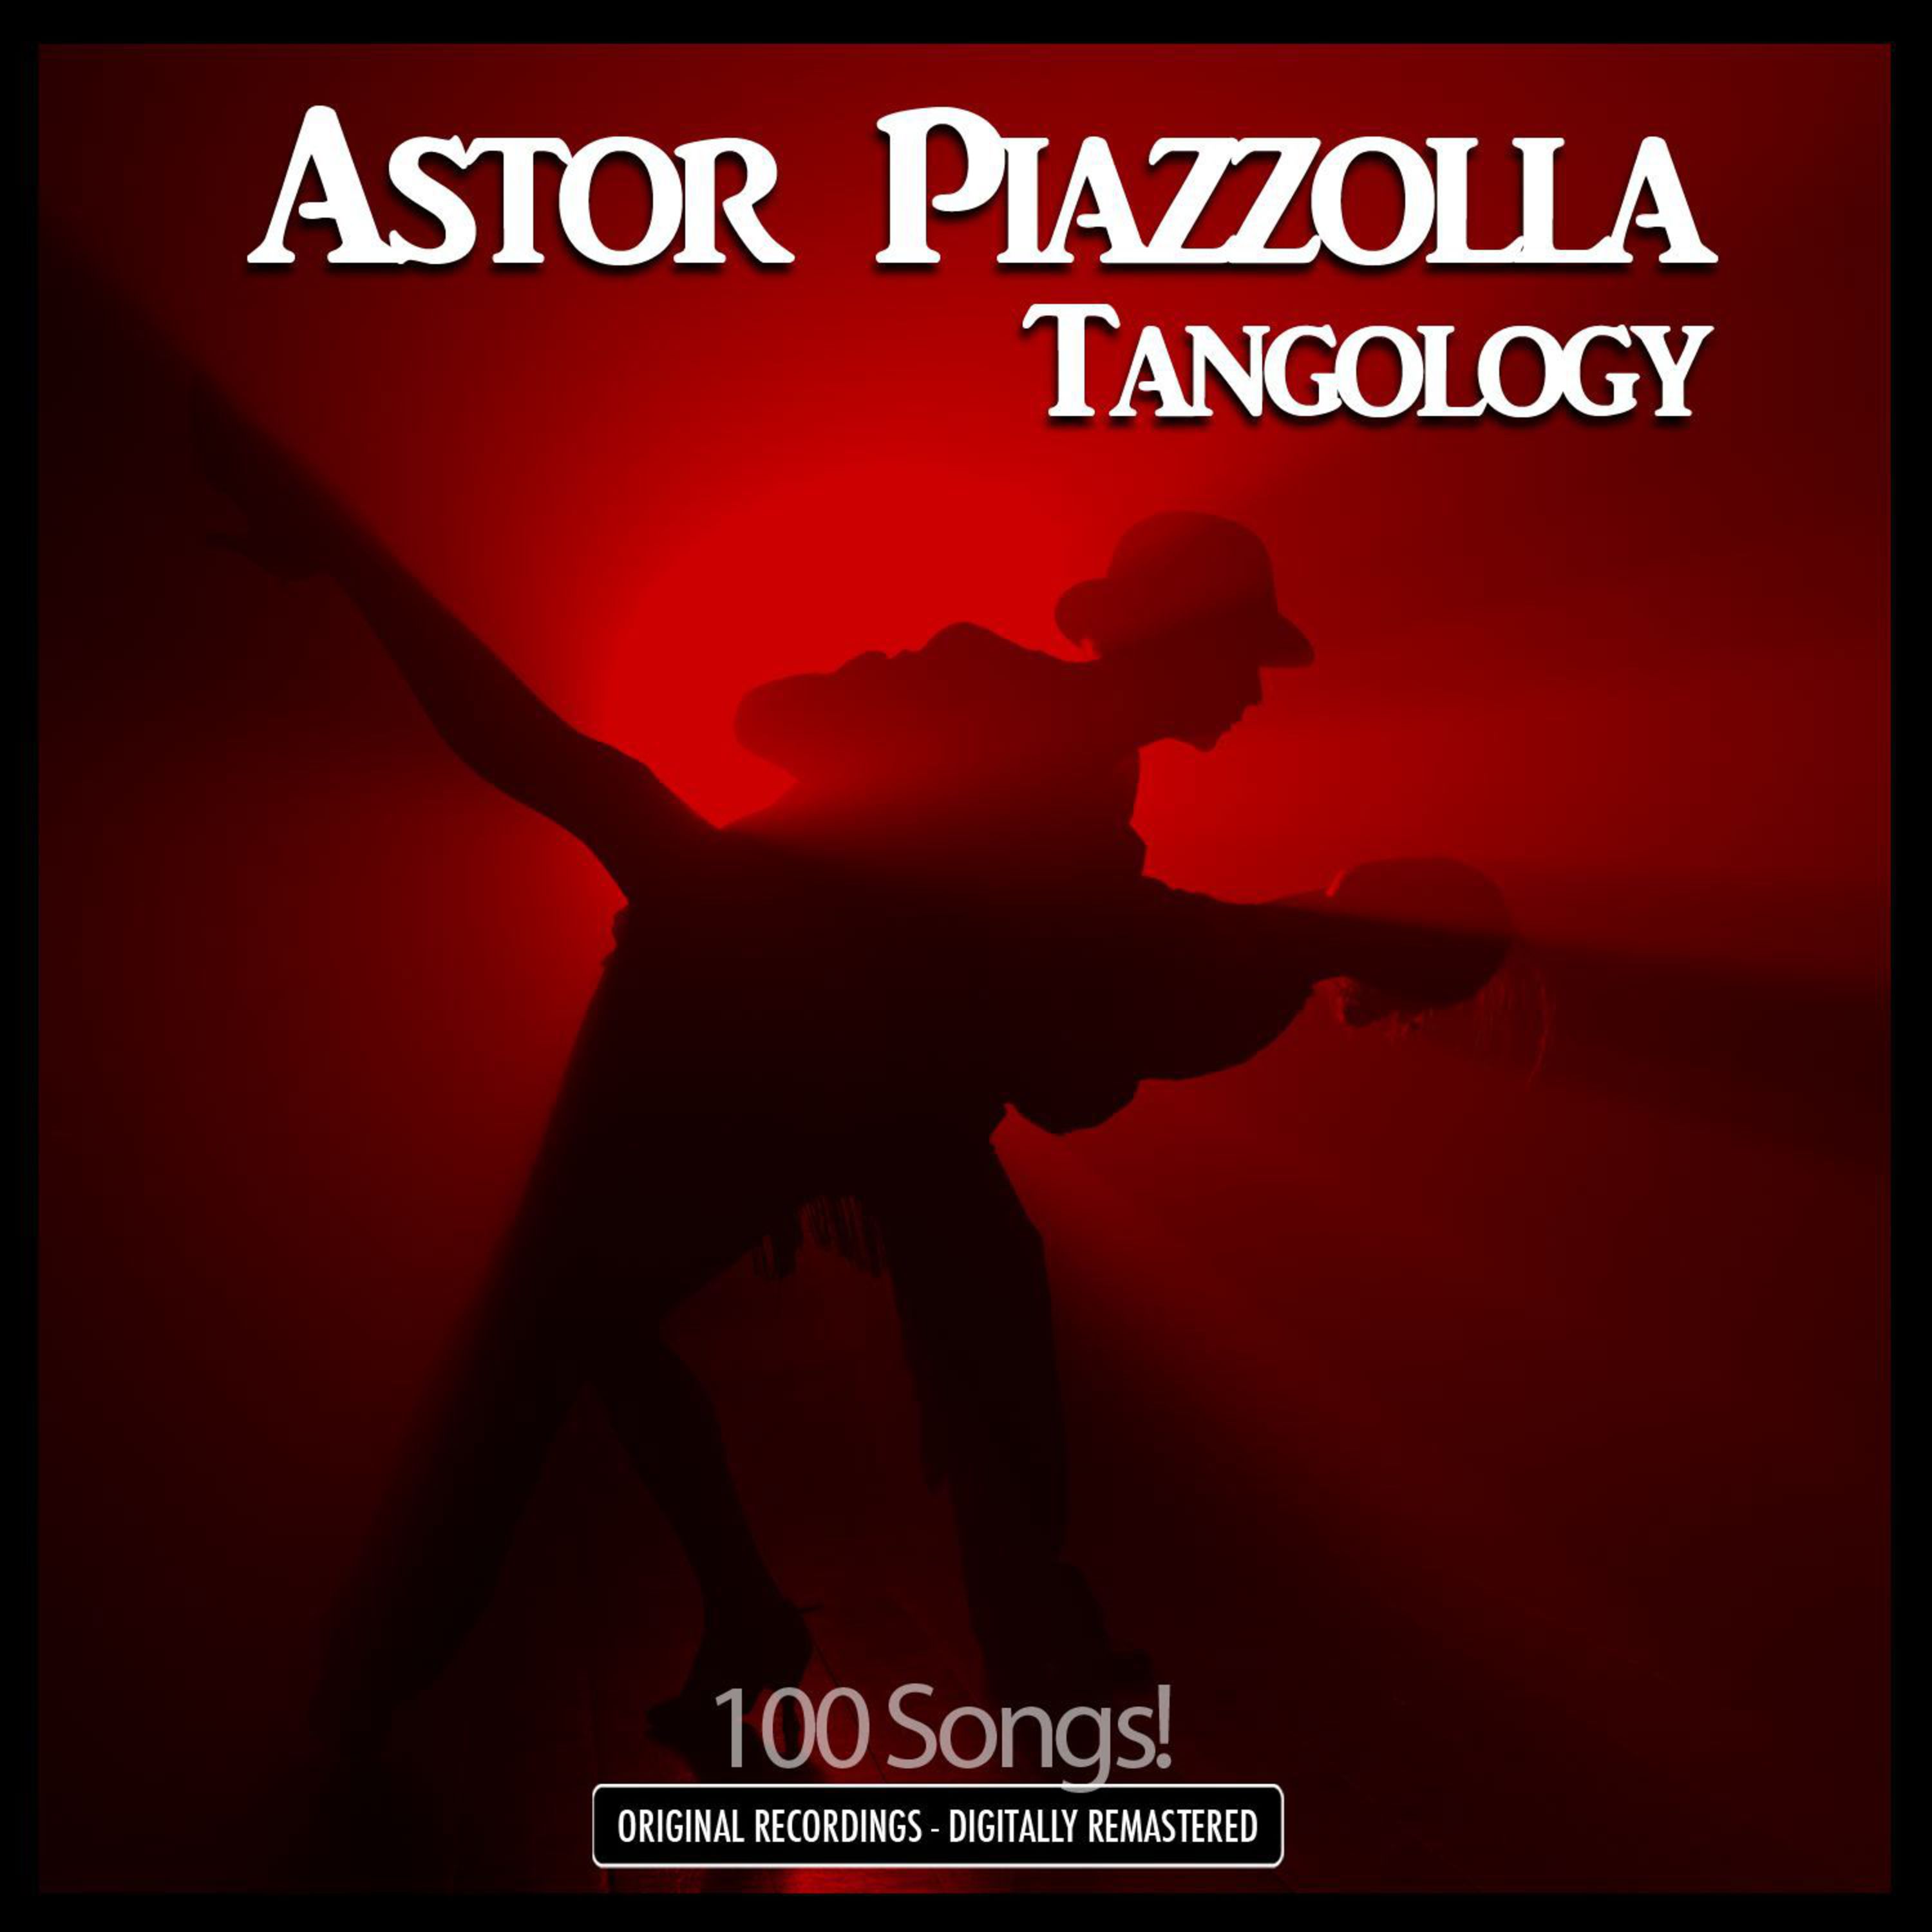 Tangology - 100 Original Recordings - Digitally Remastered